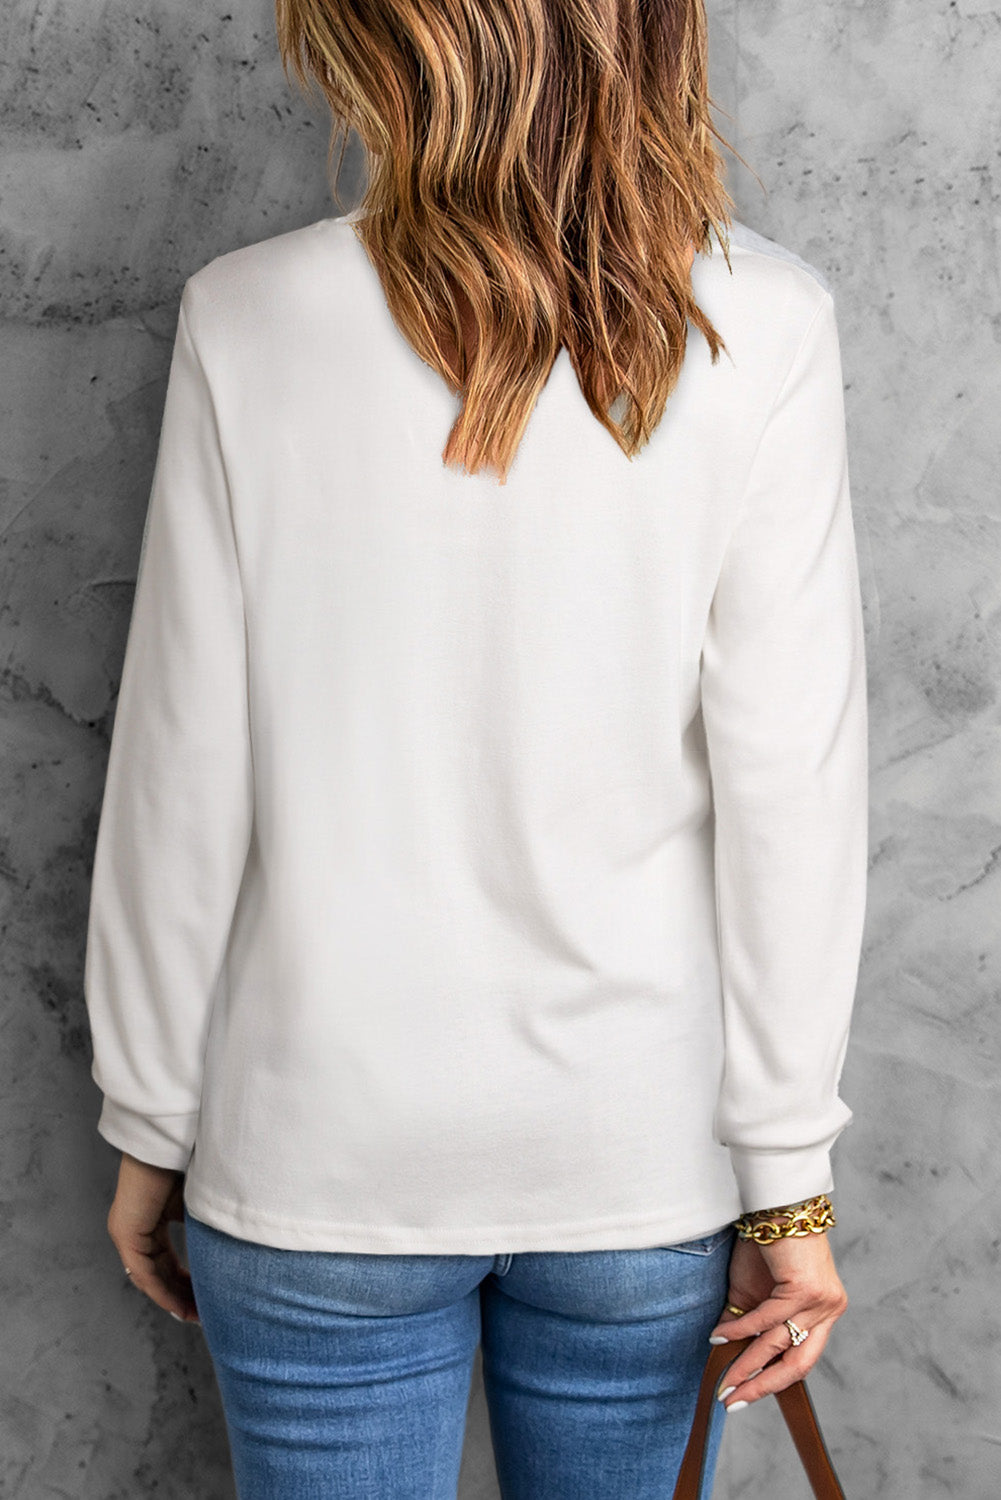 LOVE YOU MEAN IT Crewneck Long Sleeve Sweatshirt Graphic Sweatshirts JT's Designer Fashion